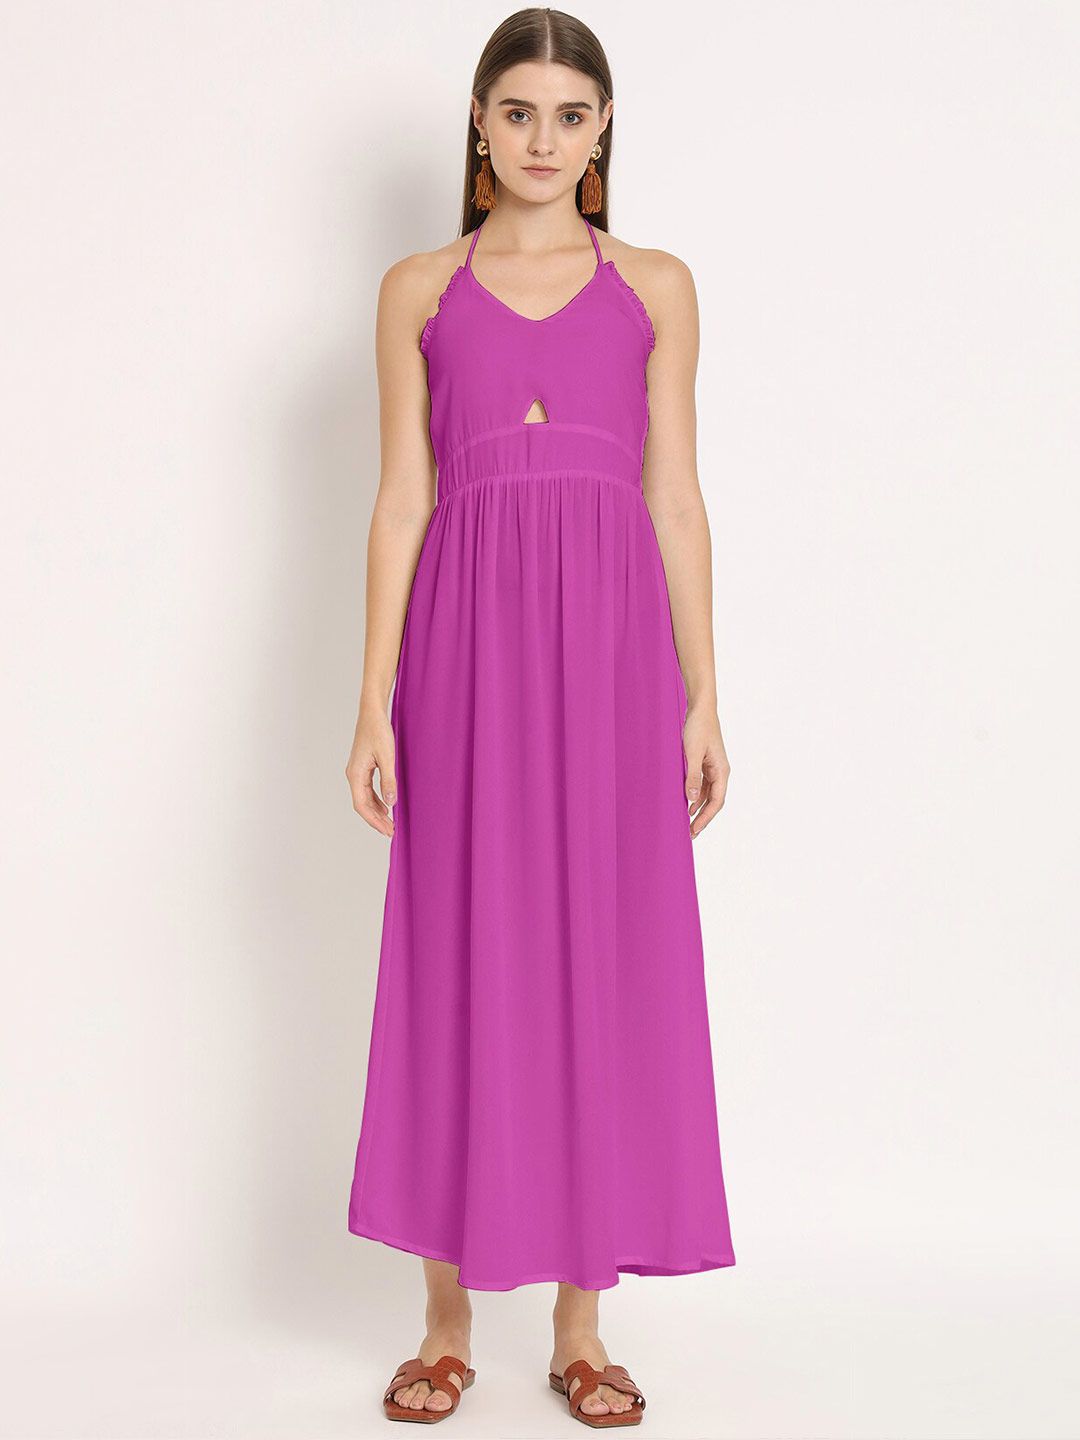 Moomaya Pink Maxi Dress Price in India